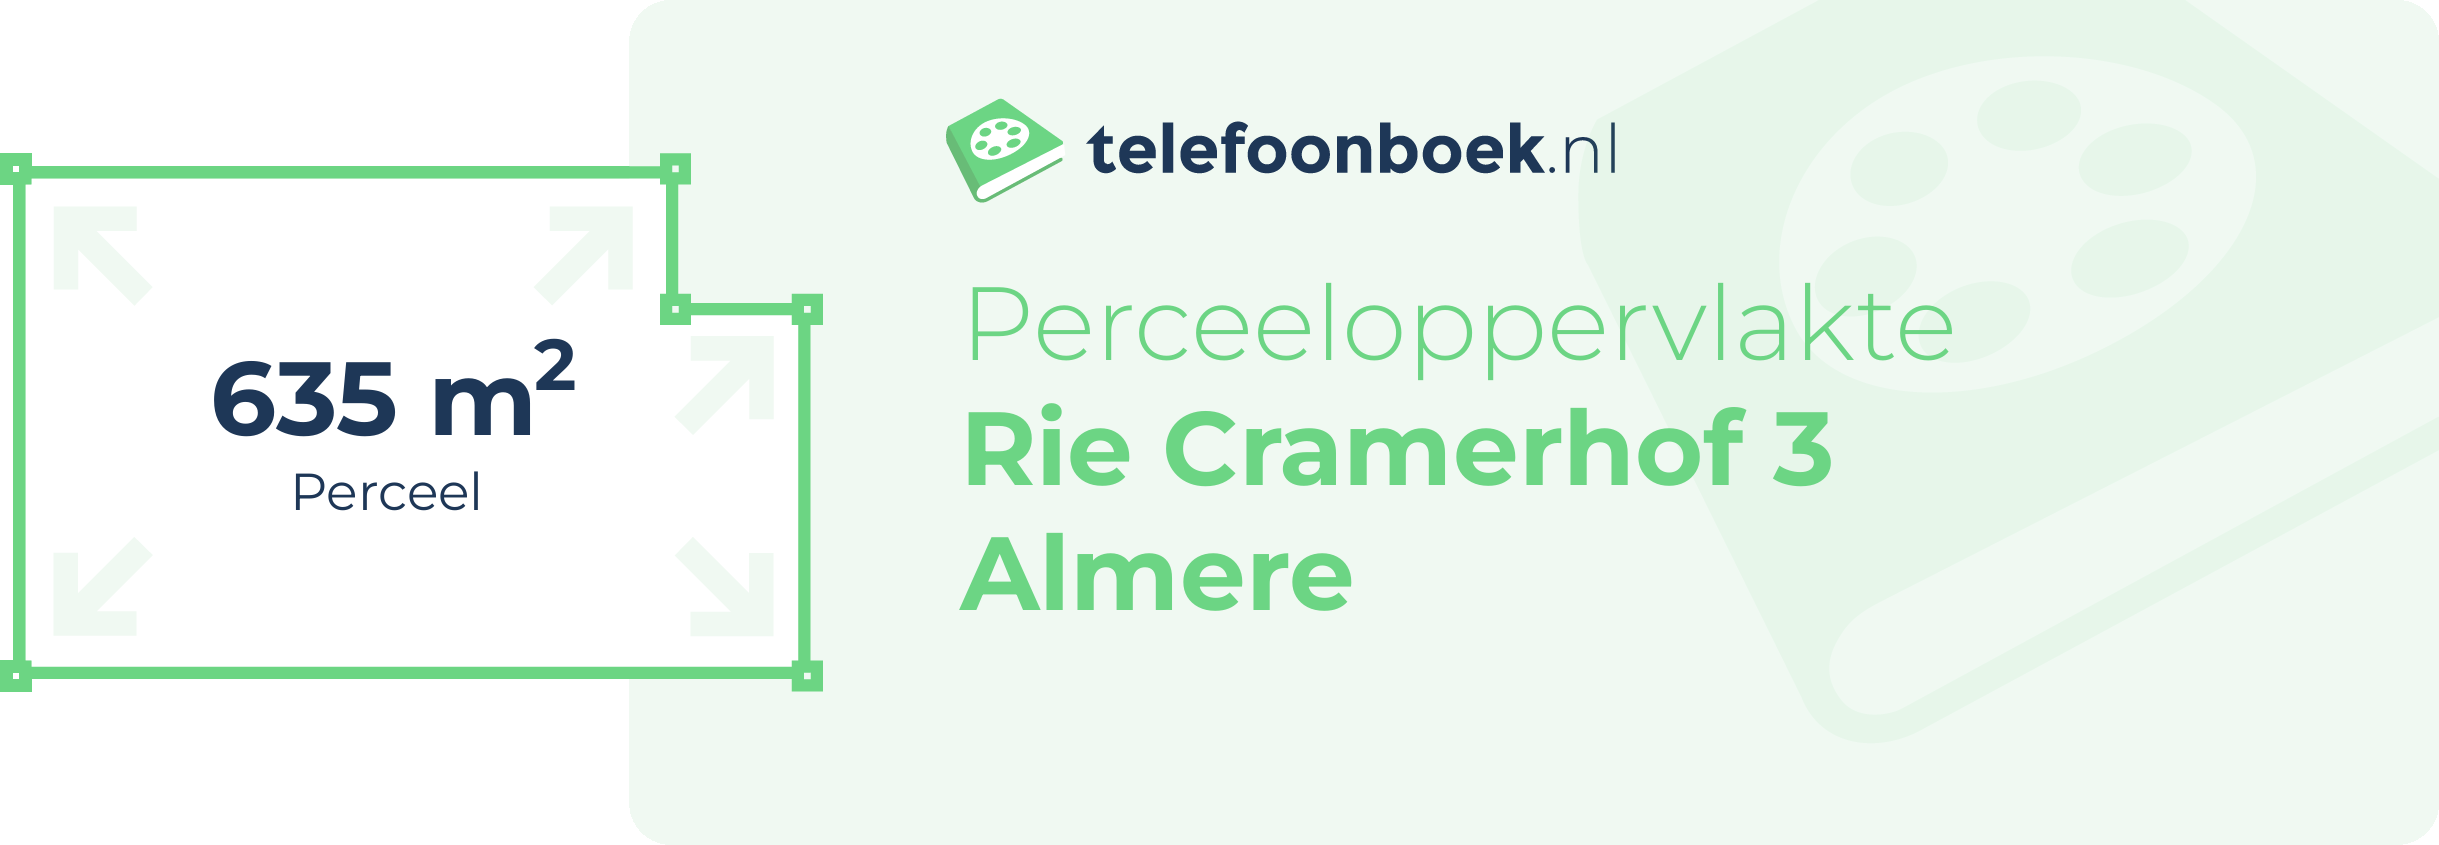 Perceeloppervlakte Rie Cramerhof 3 Almere